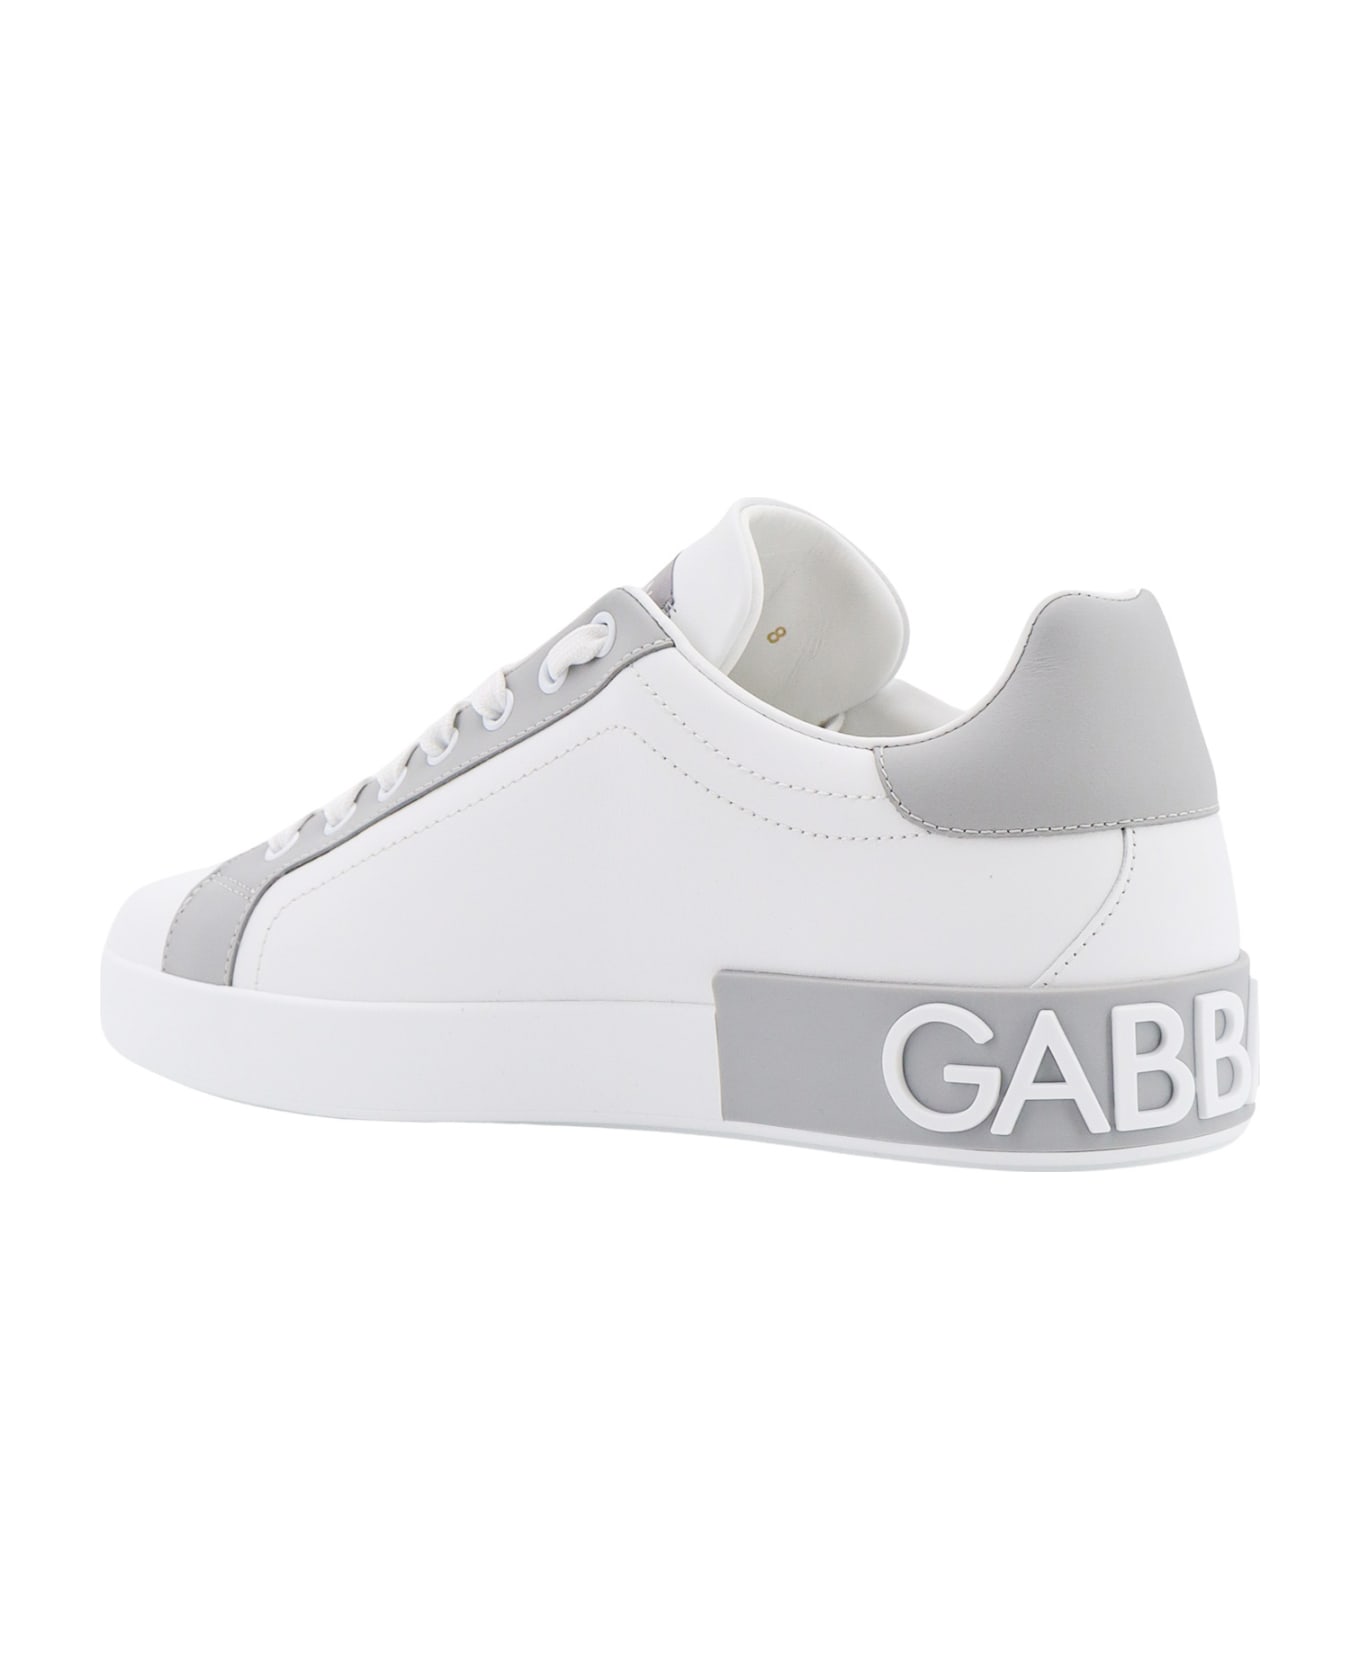 Dolce & Gabbana Portofino Sneakers - WHITE/GREY